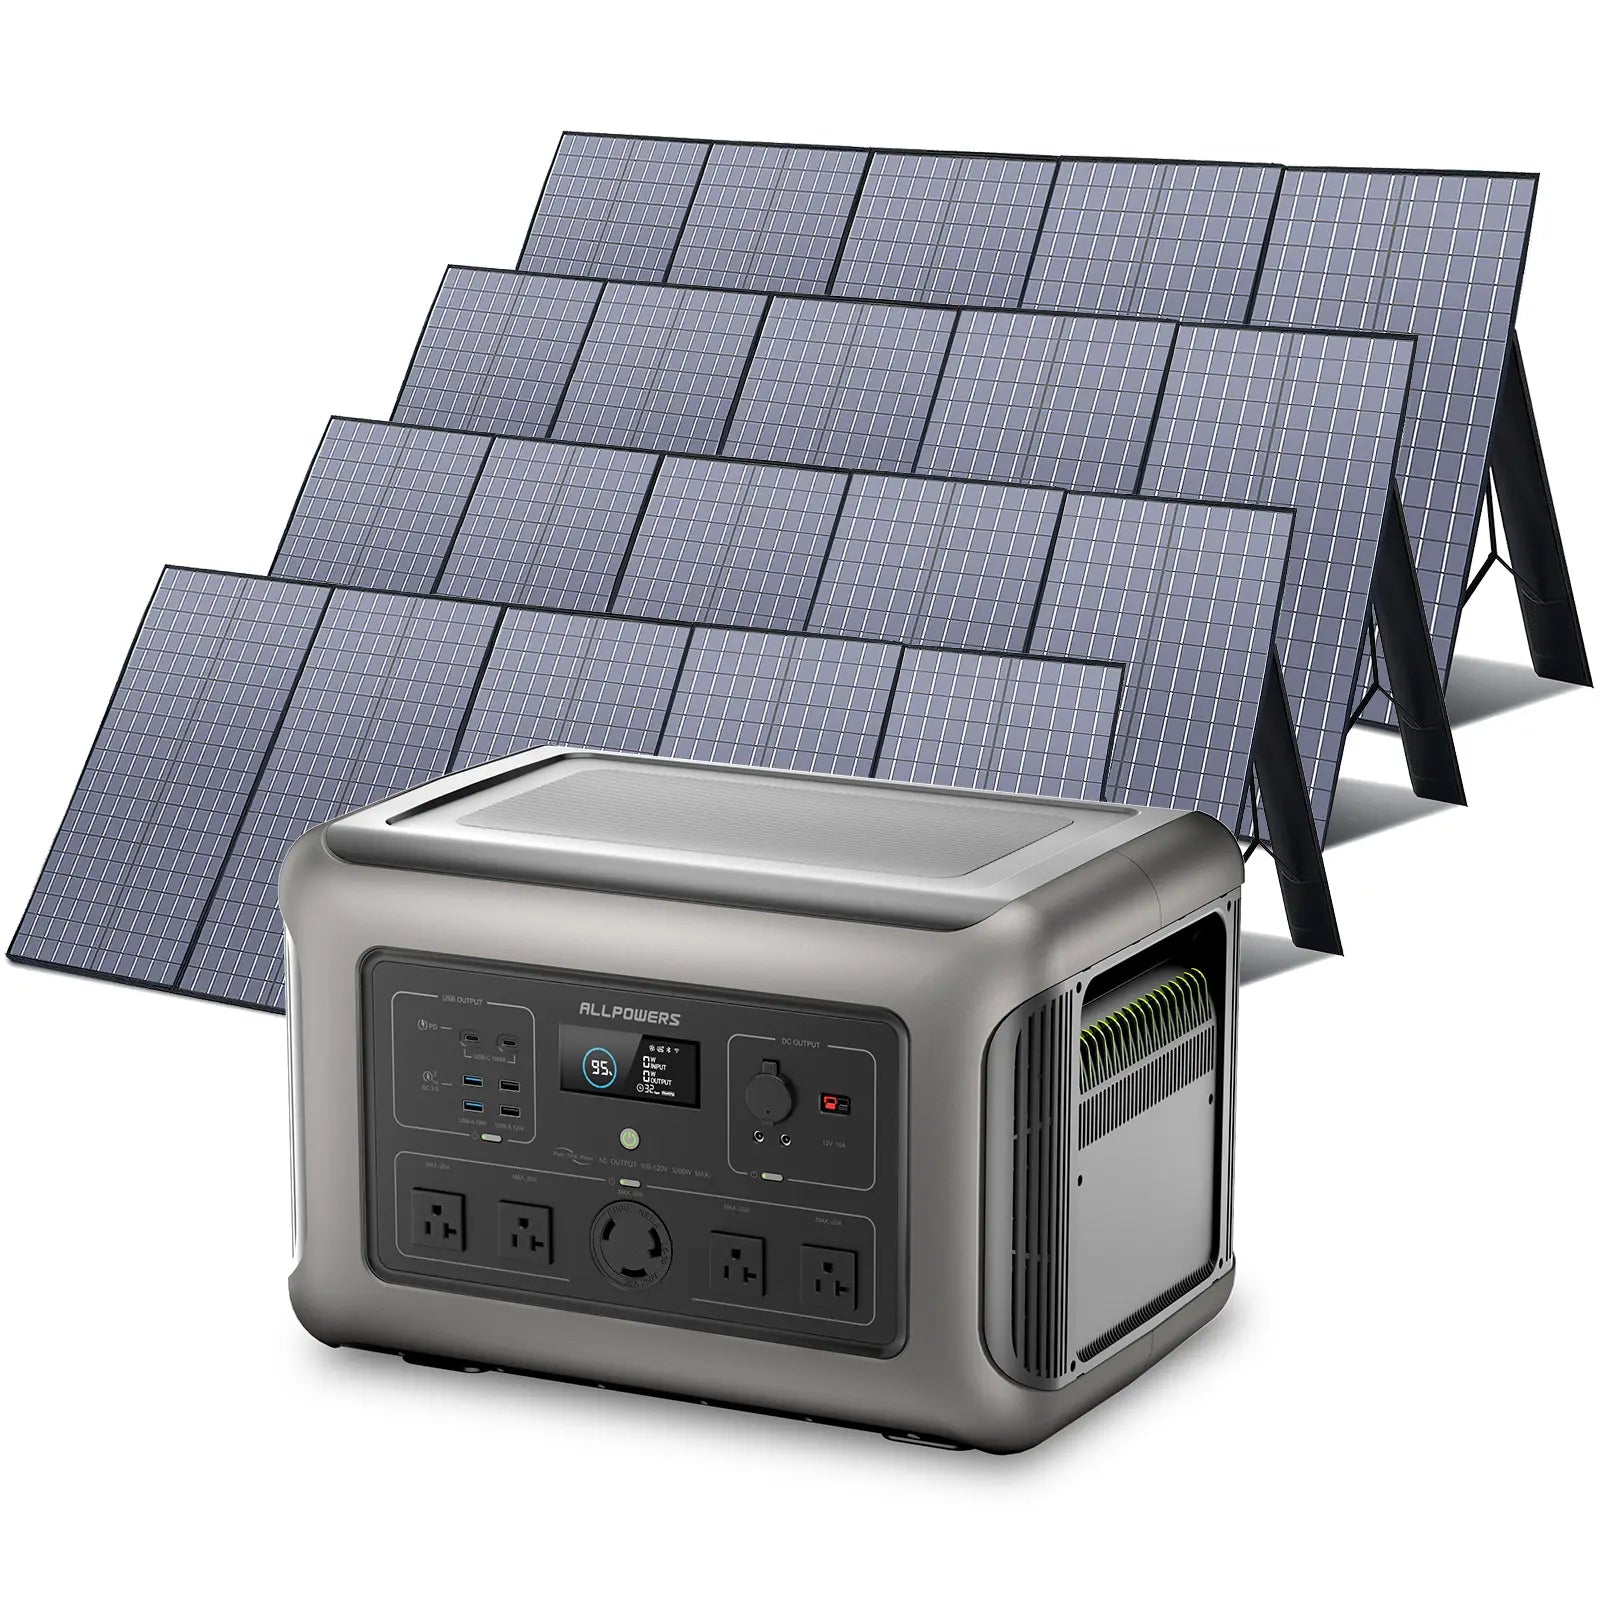 ALLPOWERS Solar Generator Kit 3200W (R3500 + SP037 400W Solar Panel)